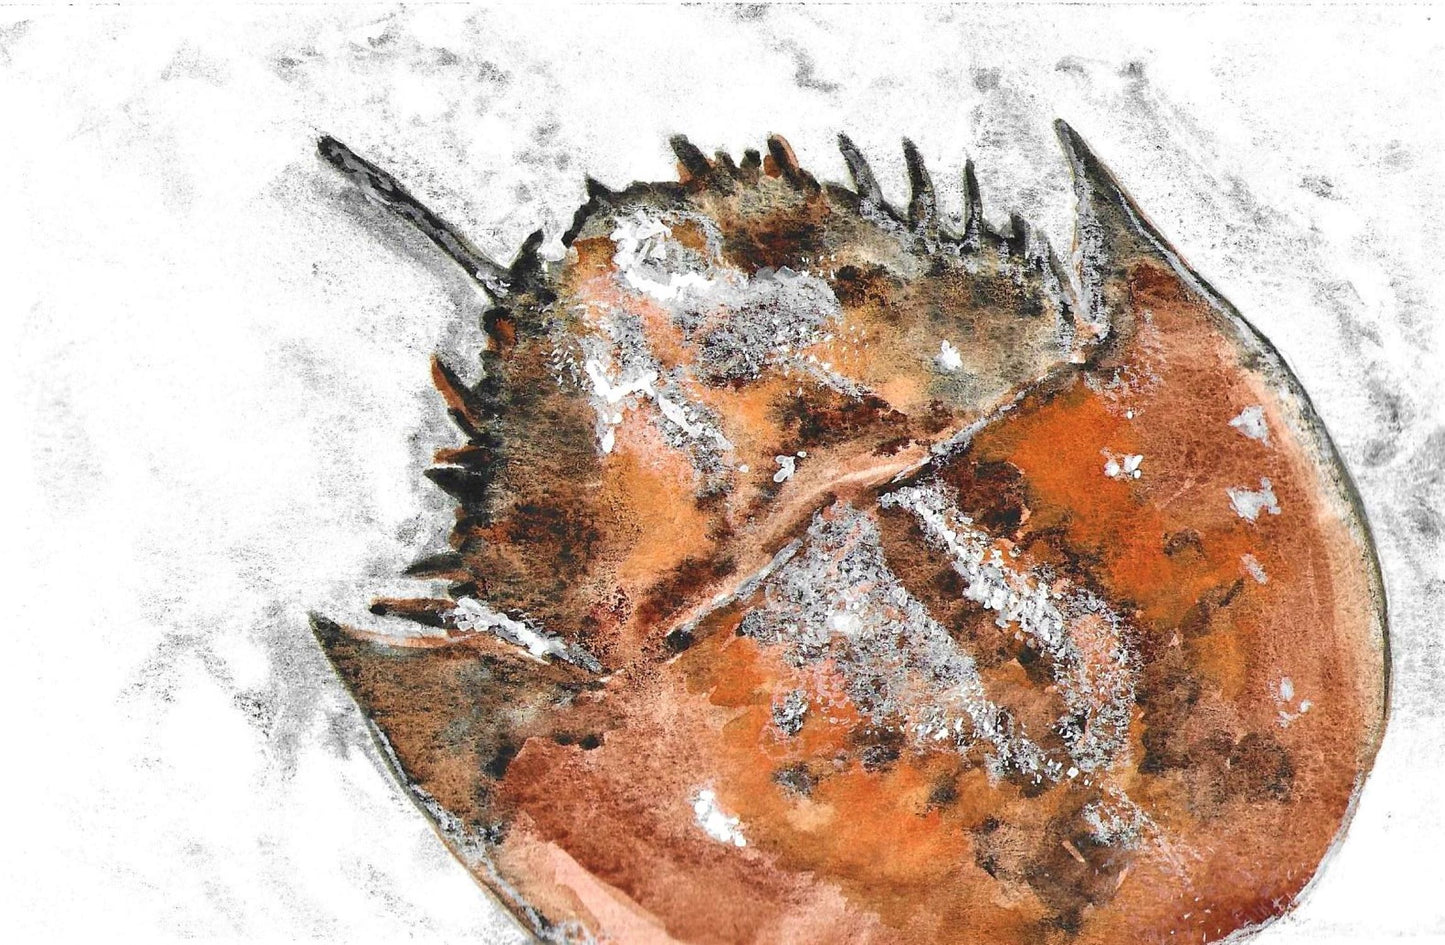 Horseshoe crab watercolor painting